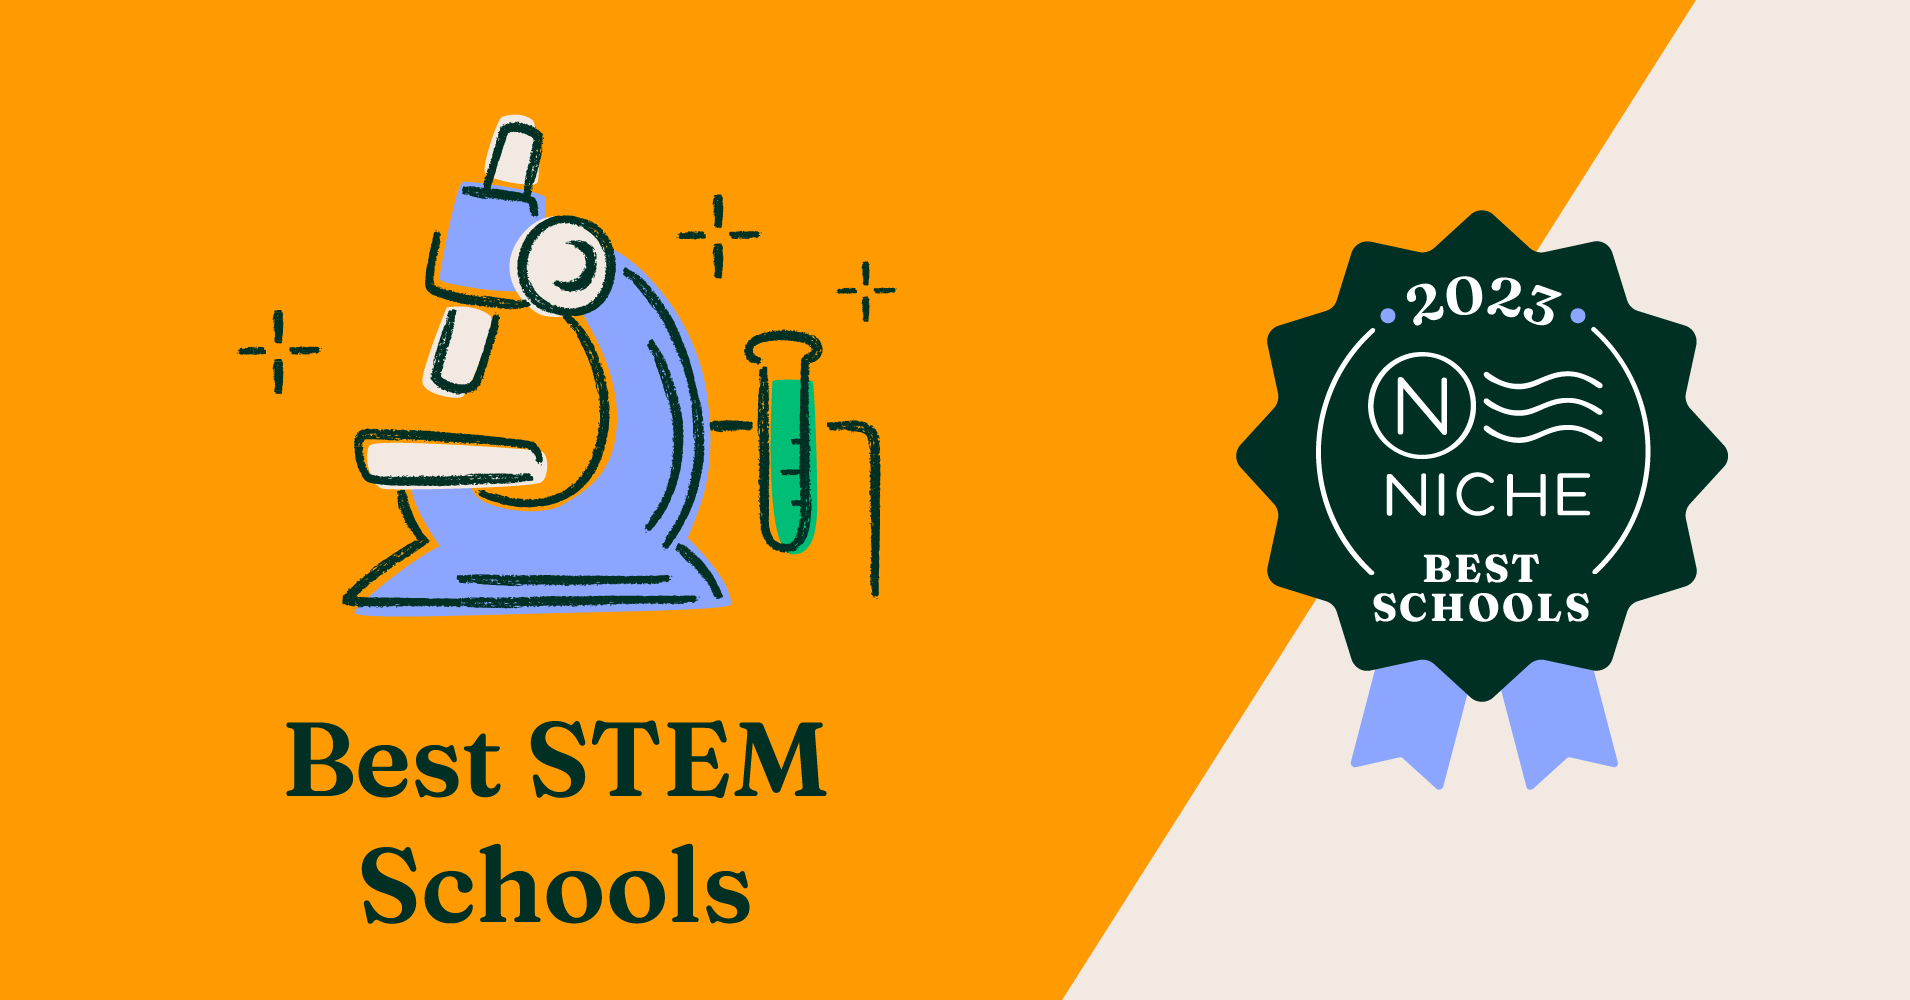 Niche.com Best STEM School